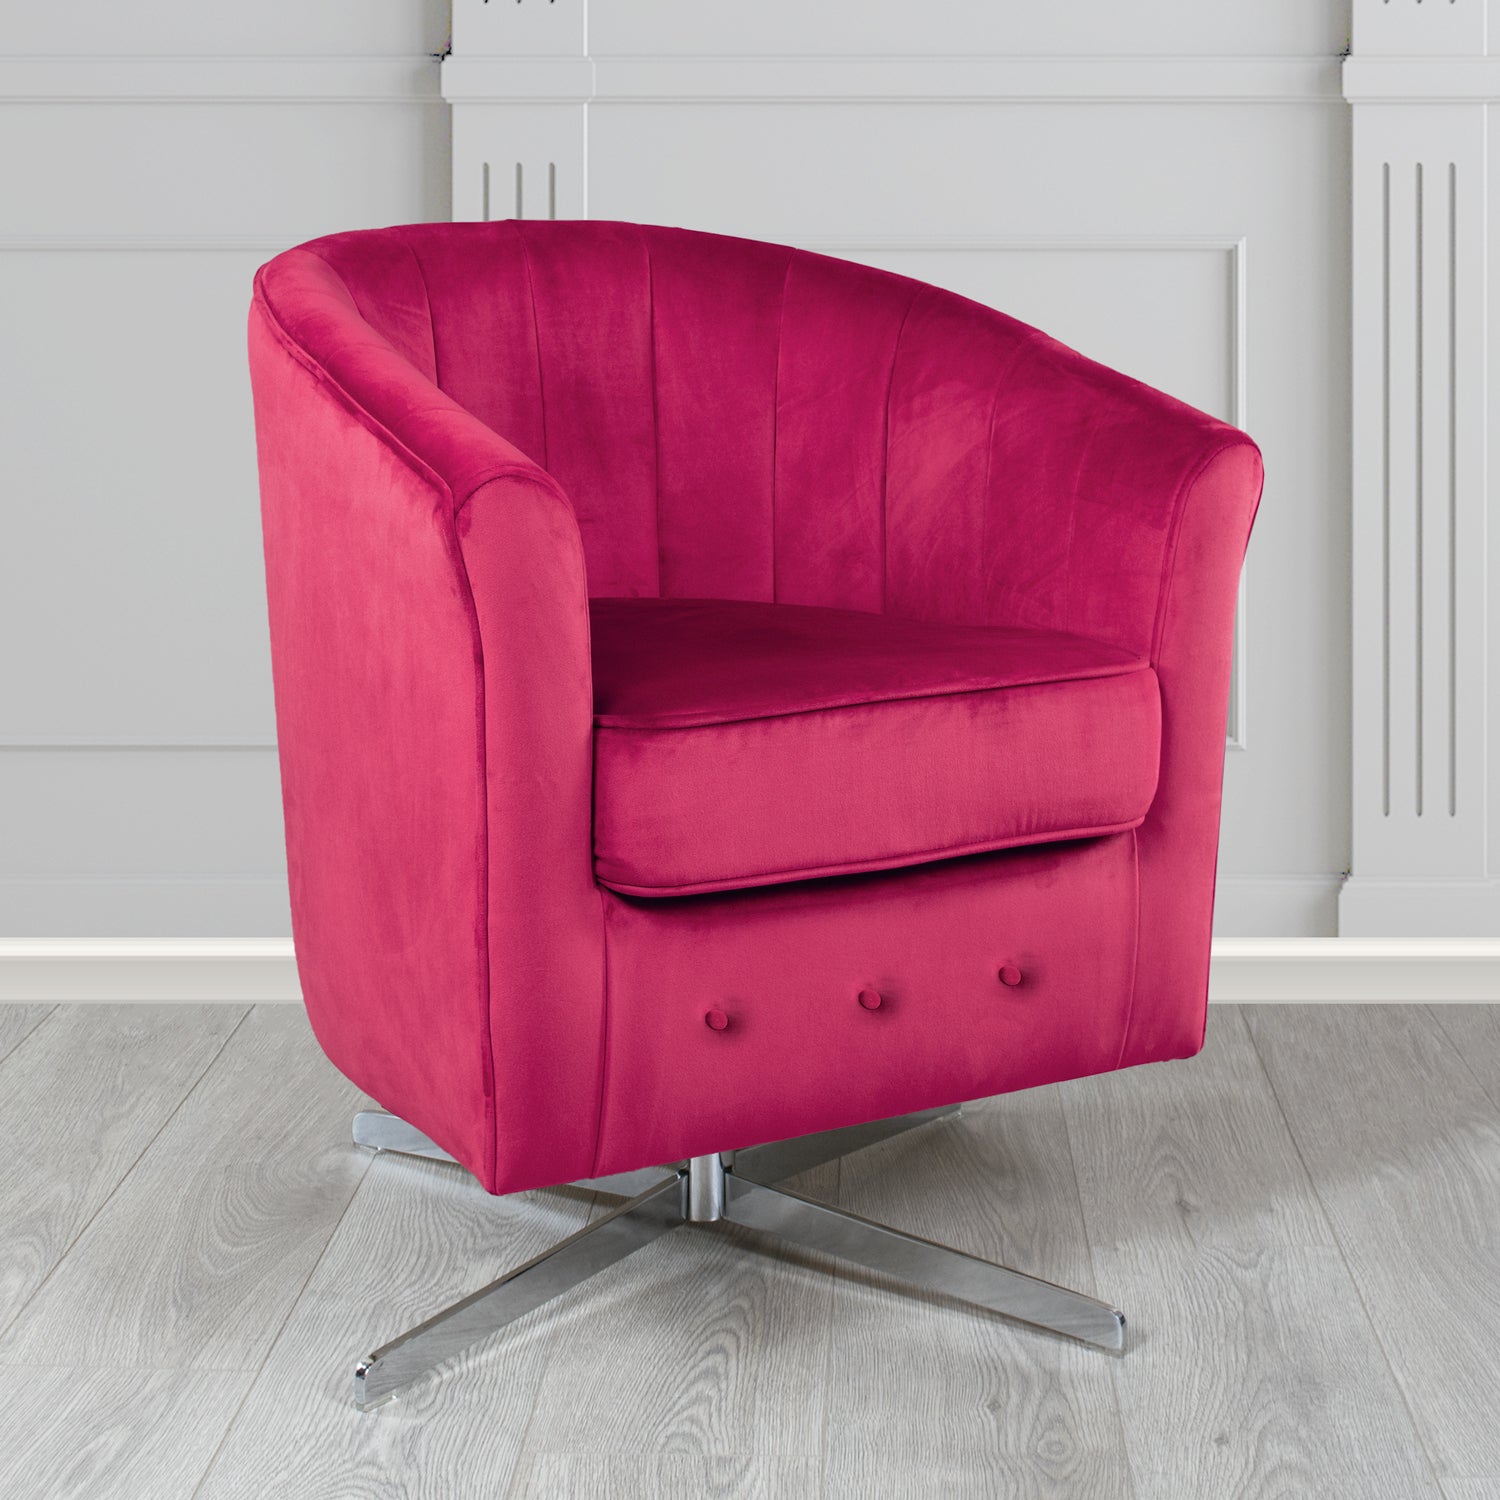 Doha Monaco Boysenberry Plain Velvet Fabric Swivel Tub Chair - The Tub Chair Shop